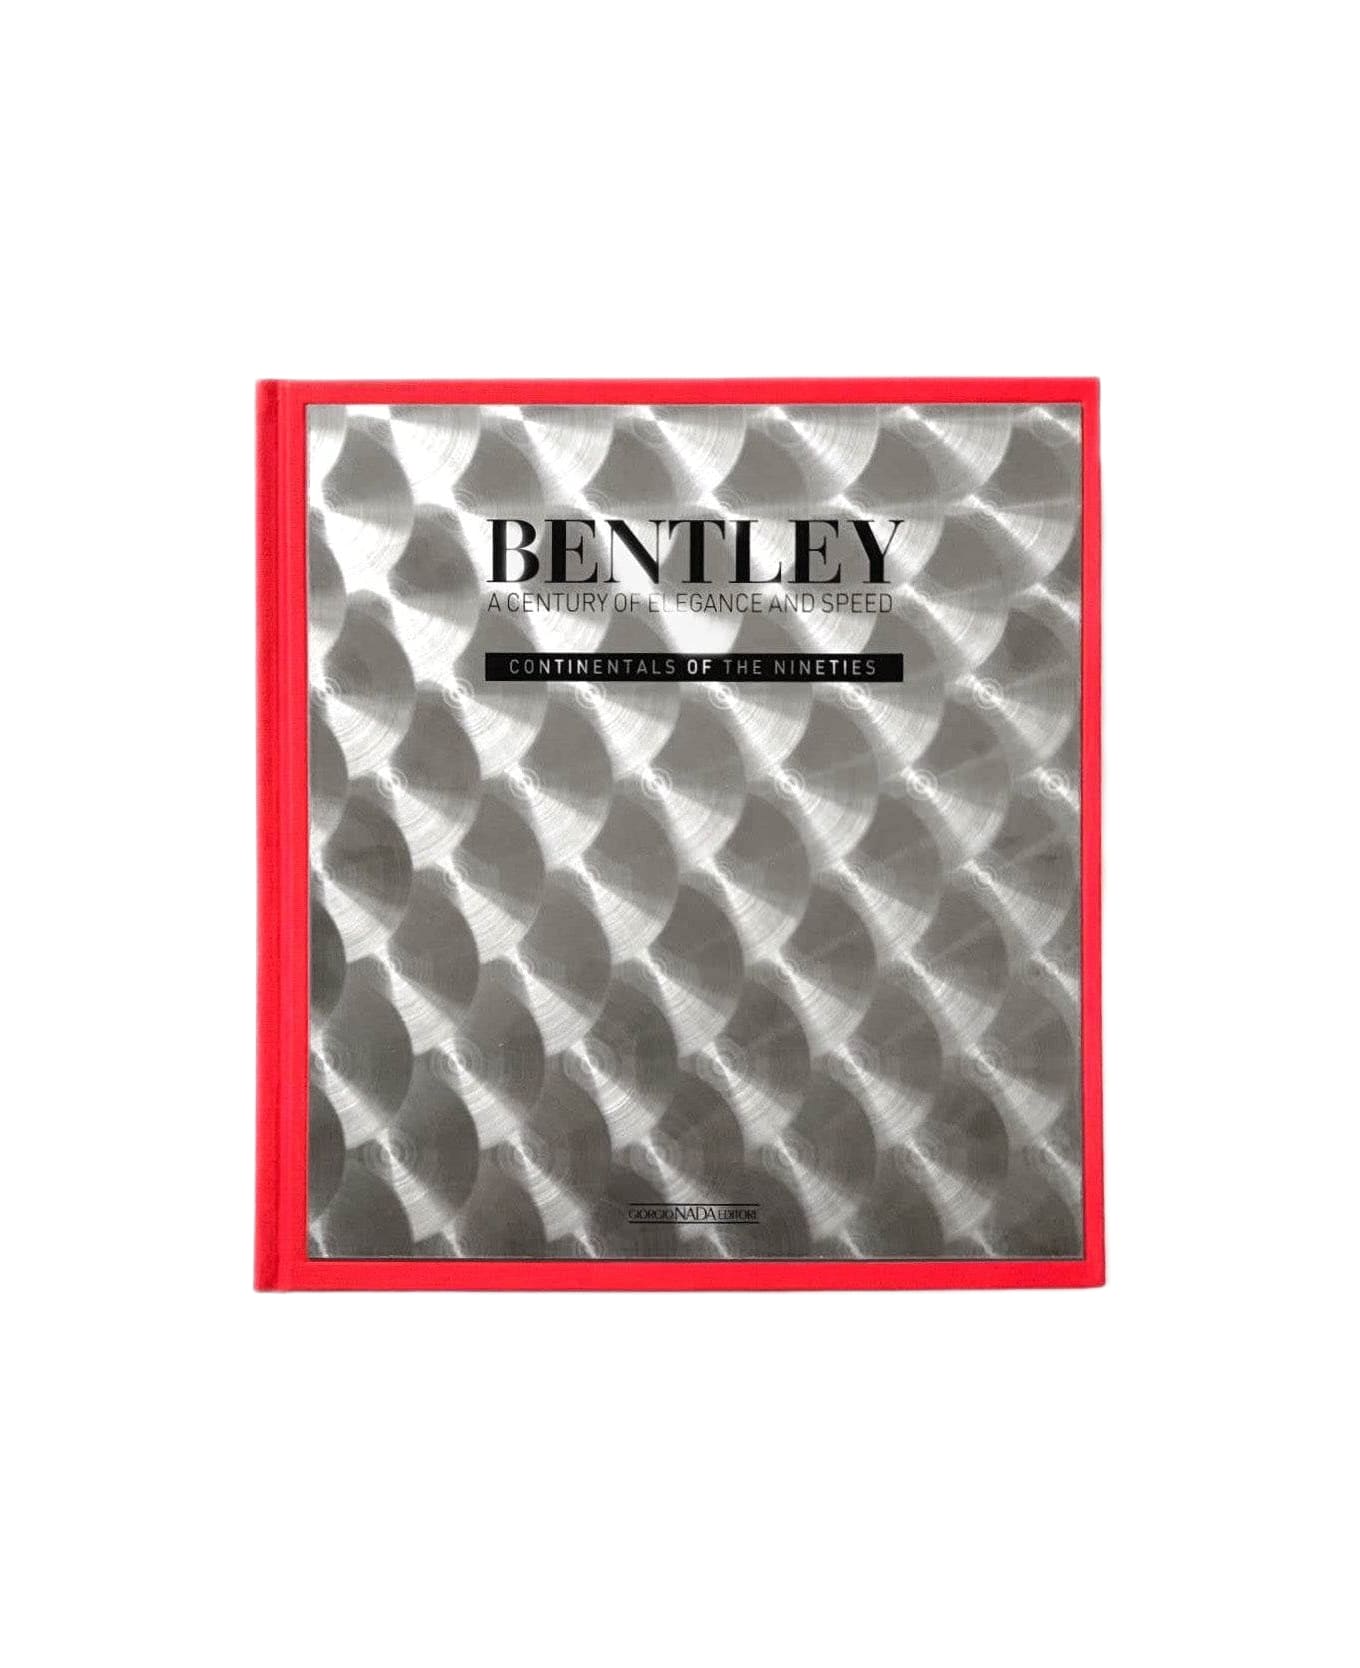 Larusmiani Bentley Book "a Century Of Elegance And Speed"  - Neutral インテリア雑貨